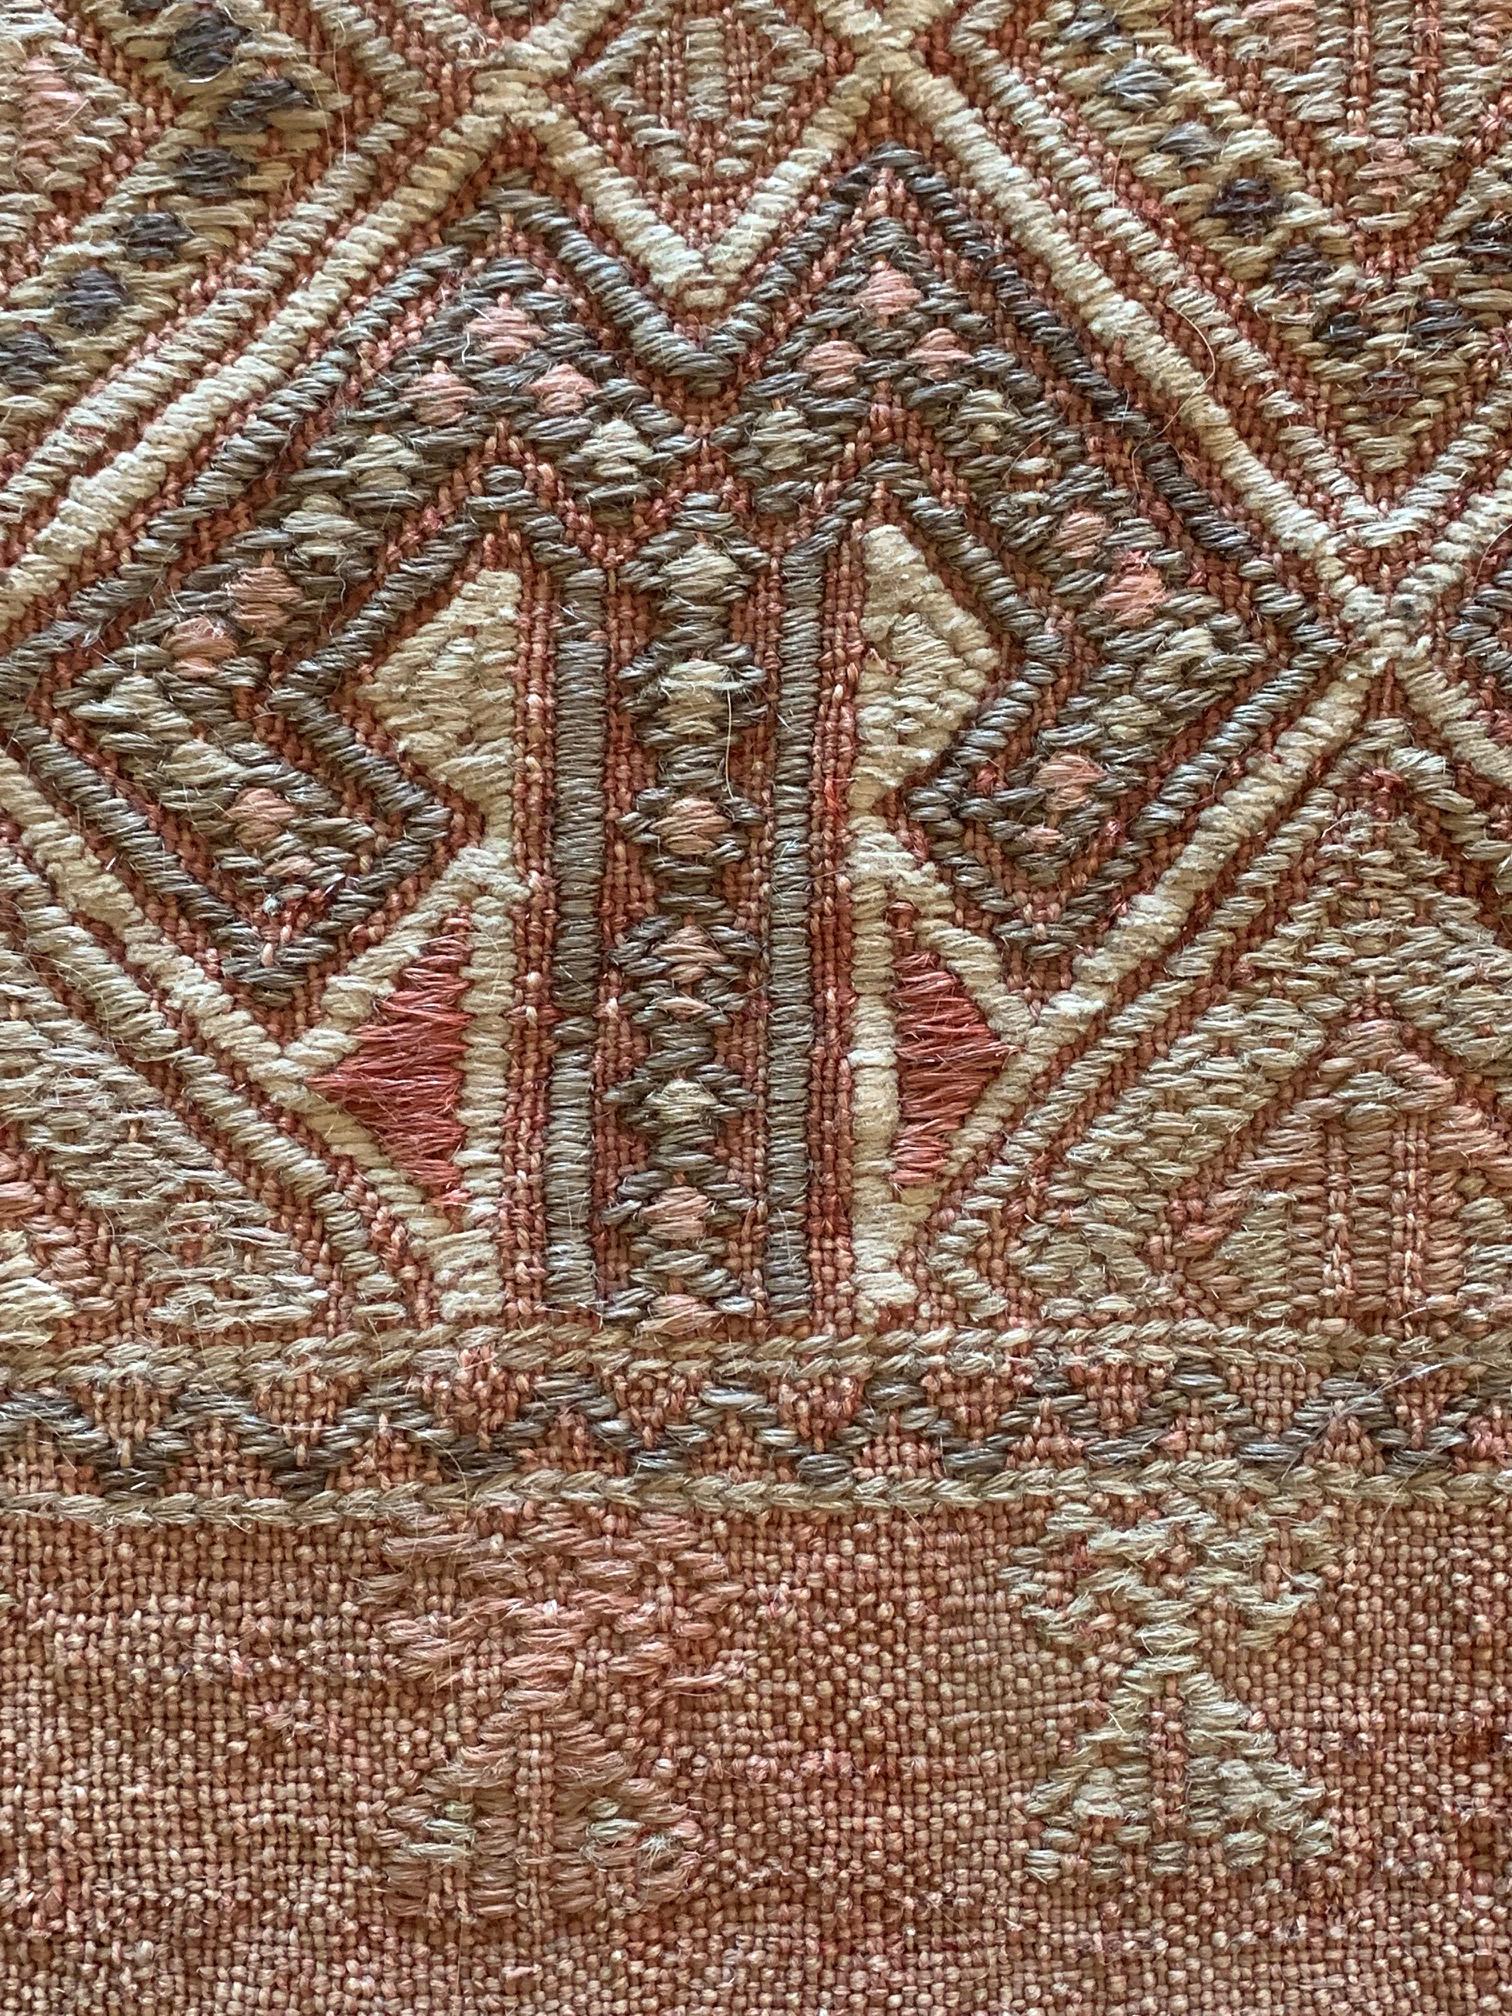 19th Century Framed Antique Turkish Tribal Textile Fragment